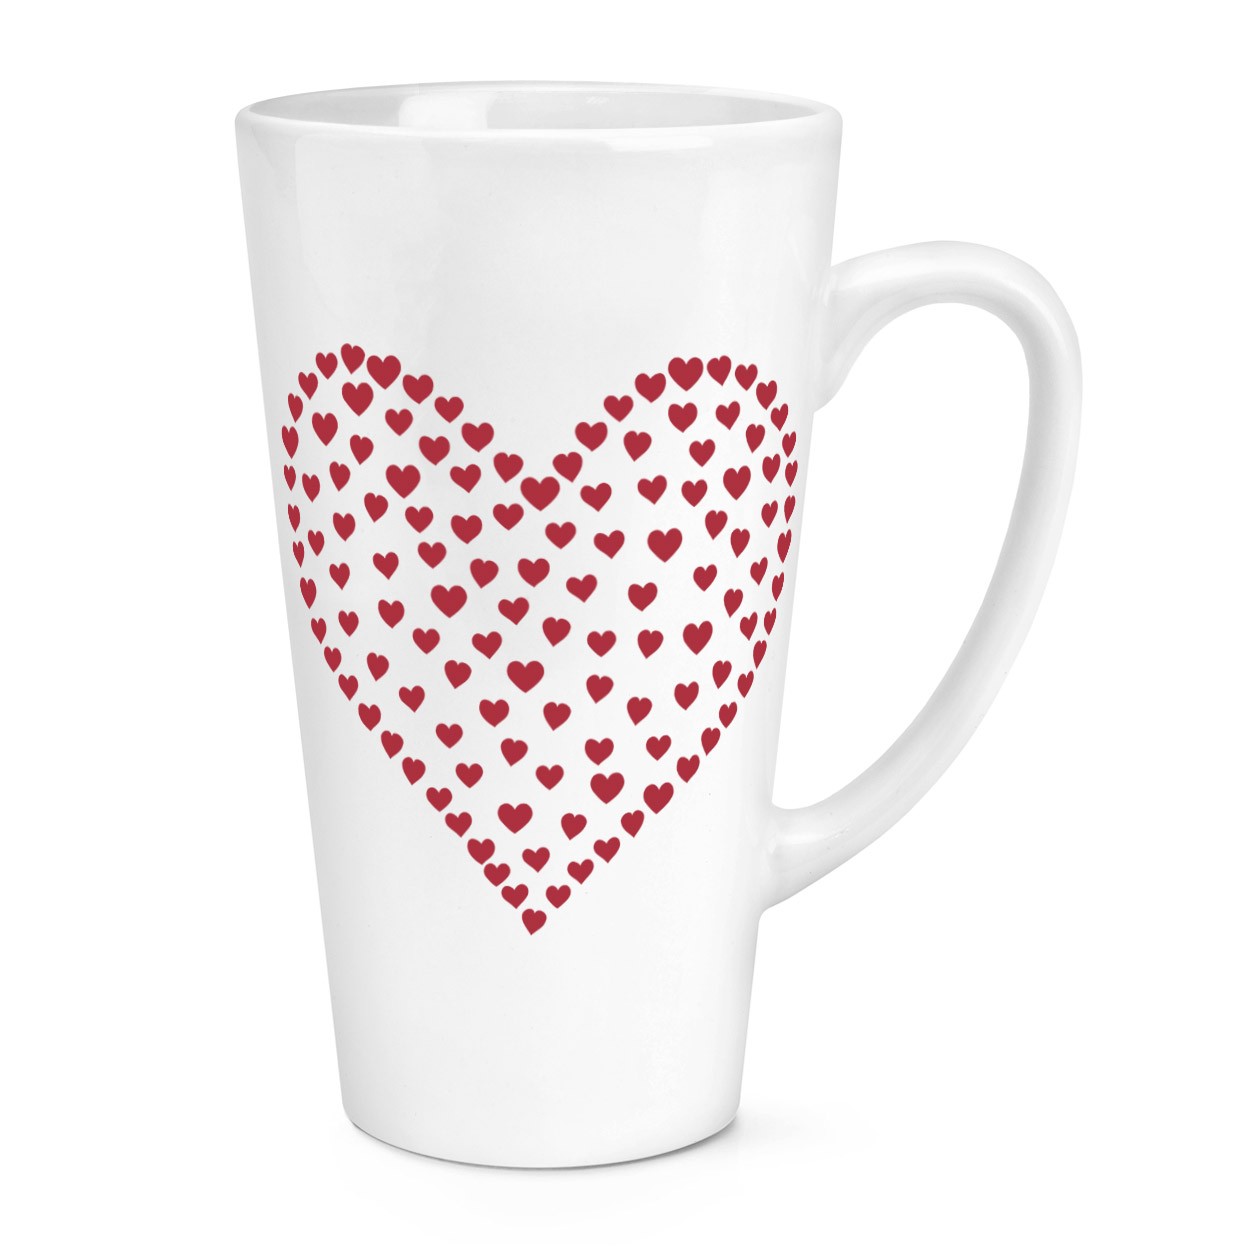 Heart Of Hearts 17oz Large Latte Mug Cup